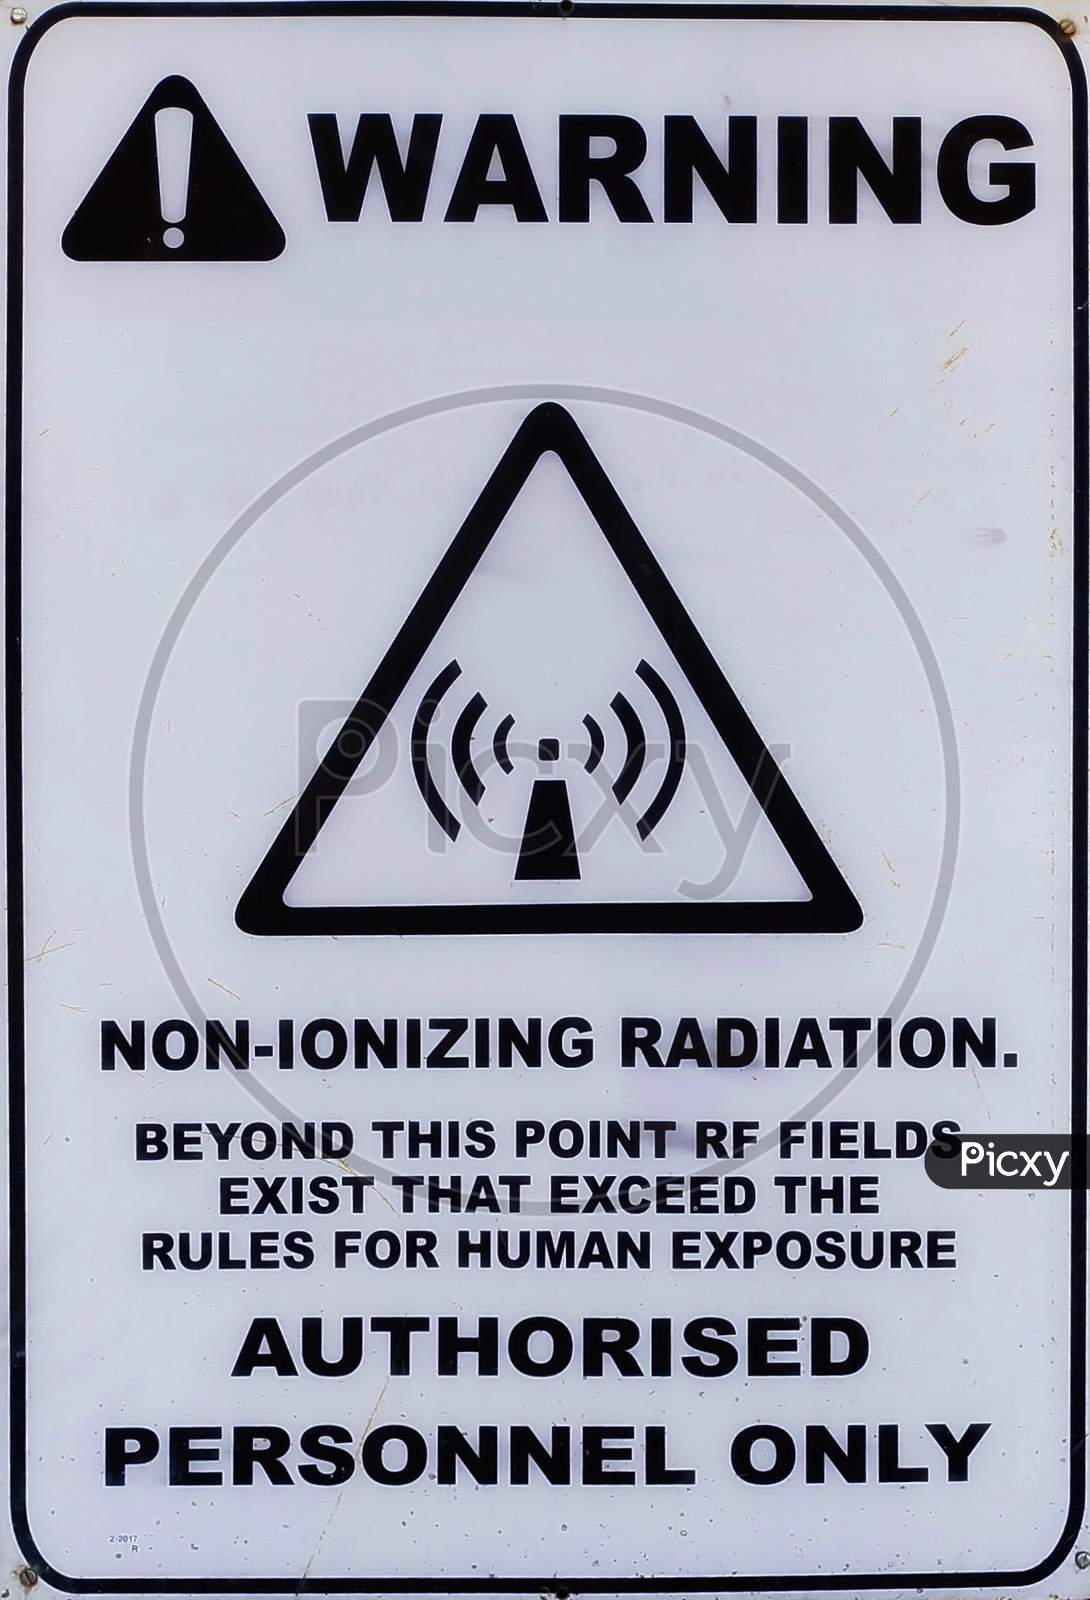 Non-ionizing radiation hazard safety area, danger warning text sign sticker label, large icon signage, isolated black triangle over white, macro closeup  K